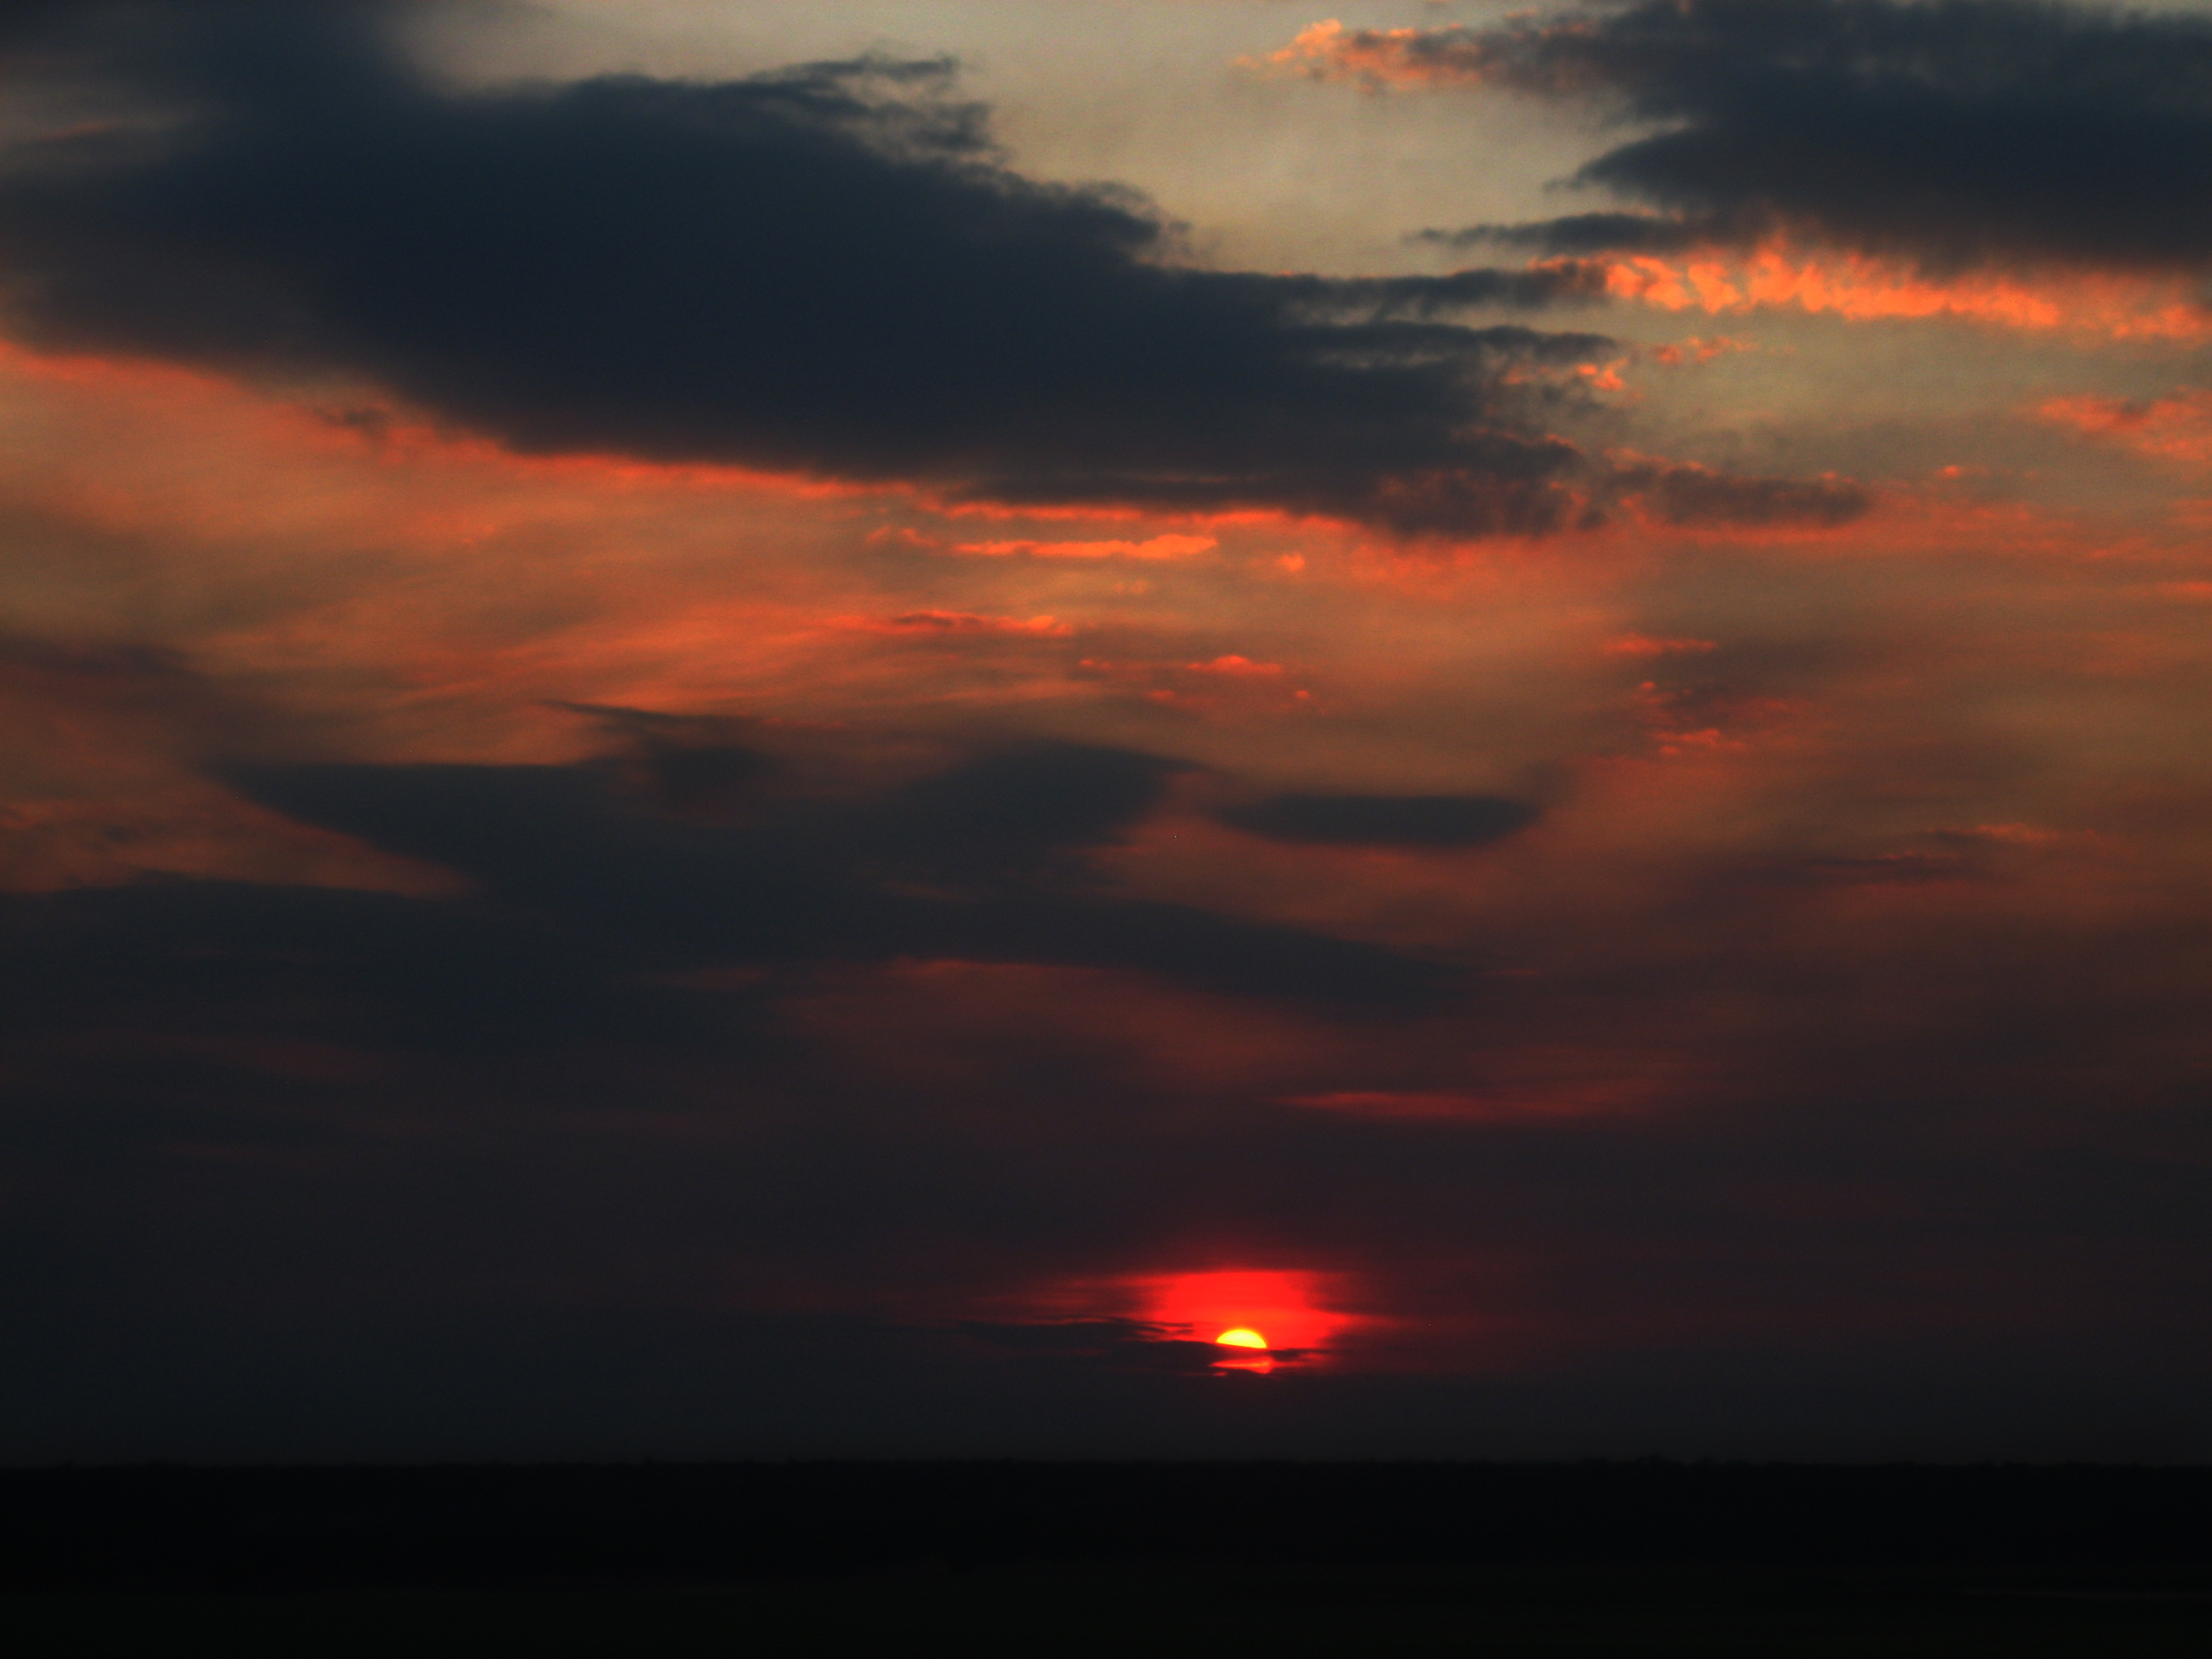 Ubirr Rock sunset, Northern Territory (8852591274)